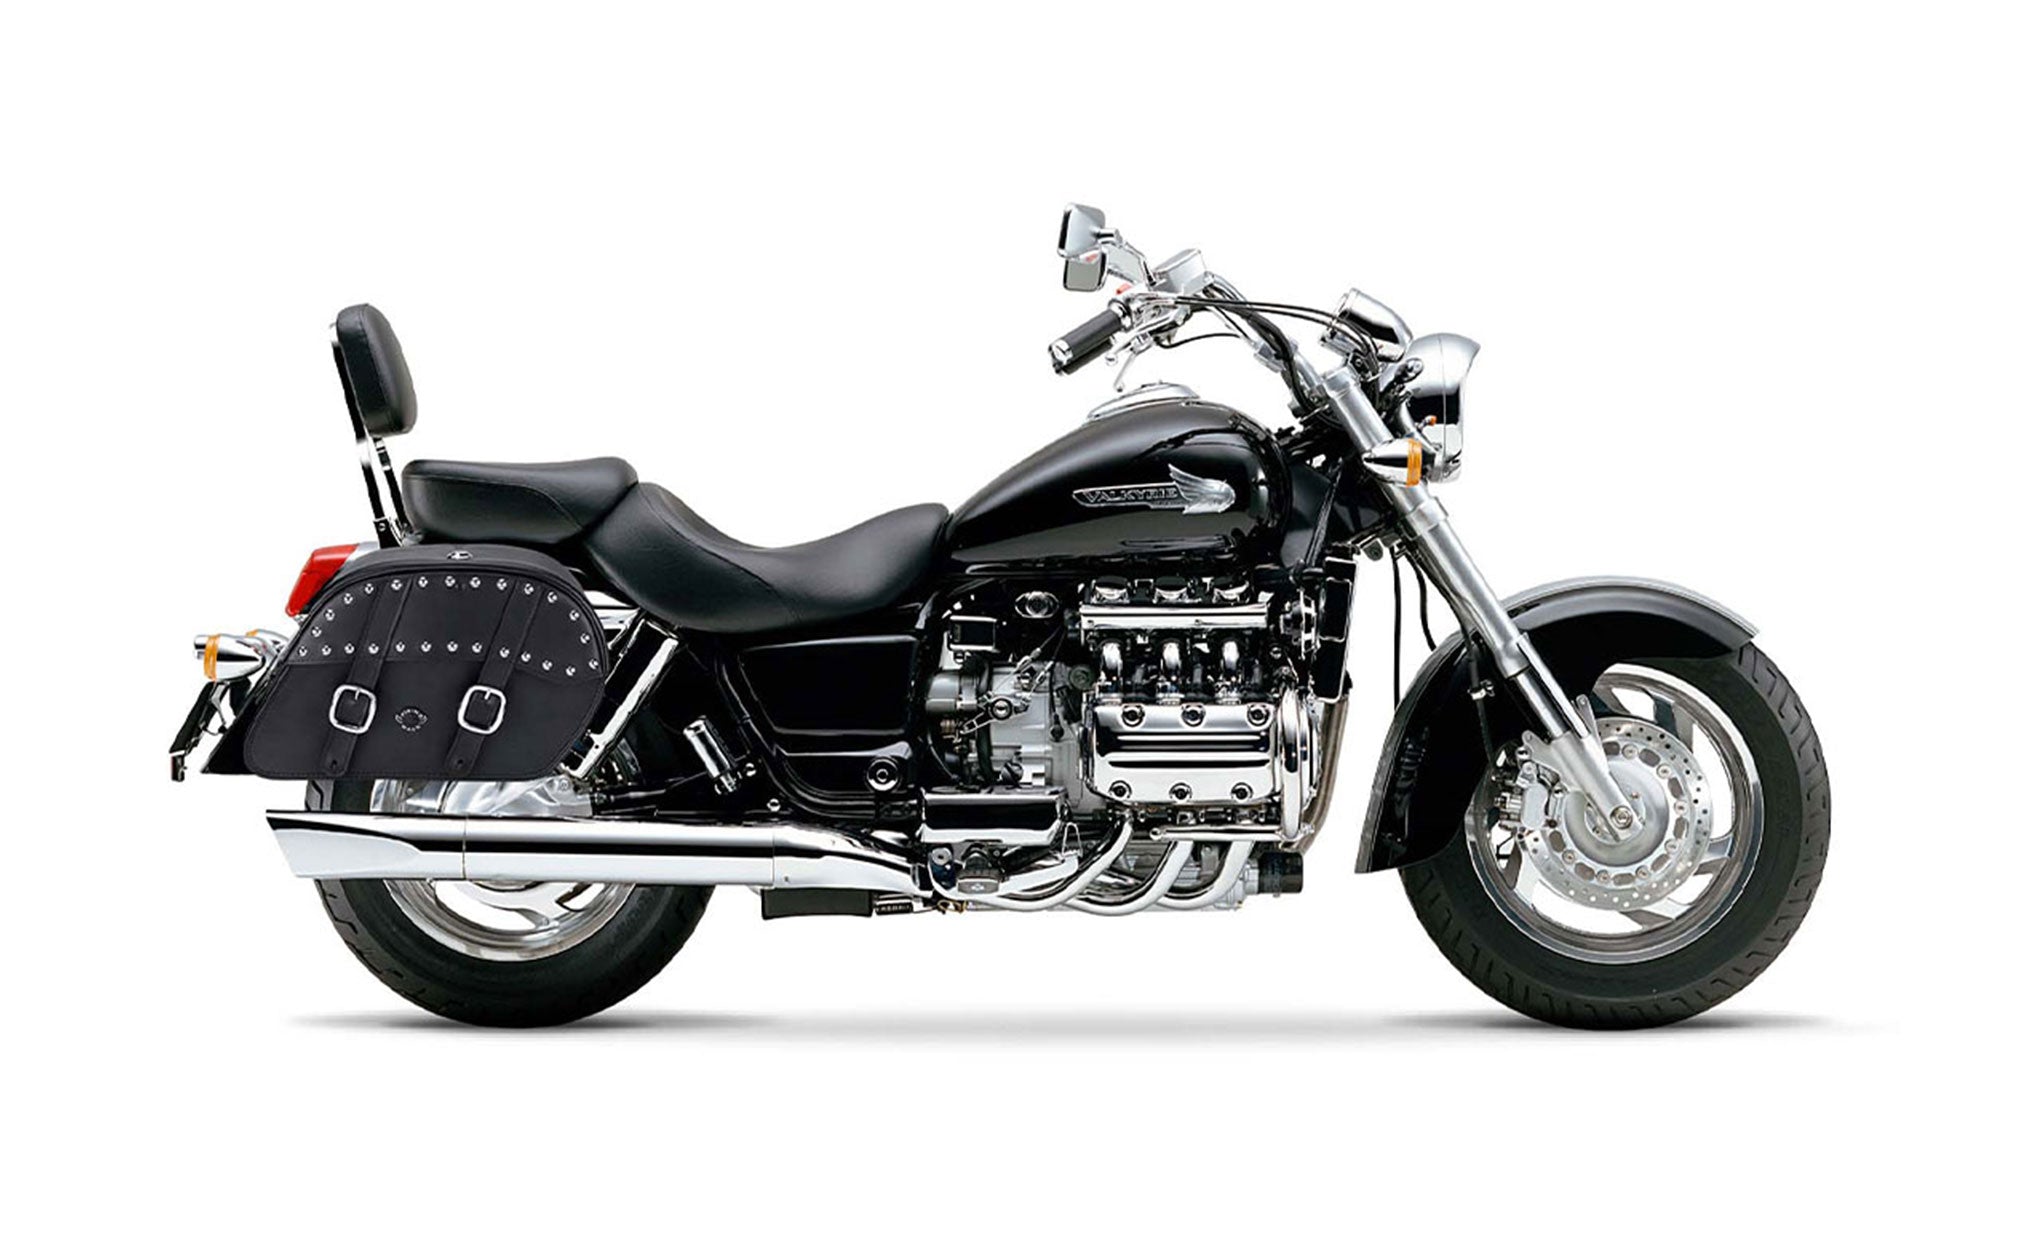 Viking Skarner Large Honda Valkyrie 1500 Standard Leather Studded Motorcycle Saddlebags on Bike Photo @expand